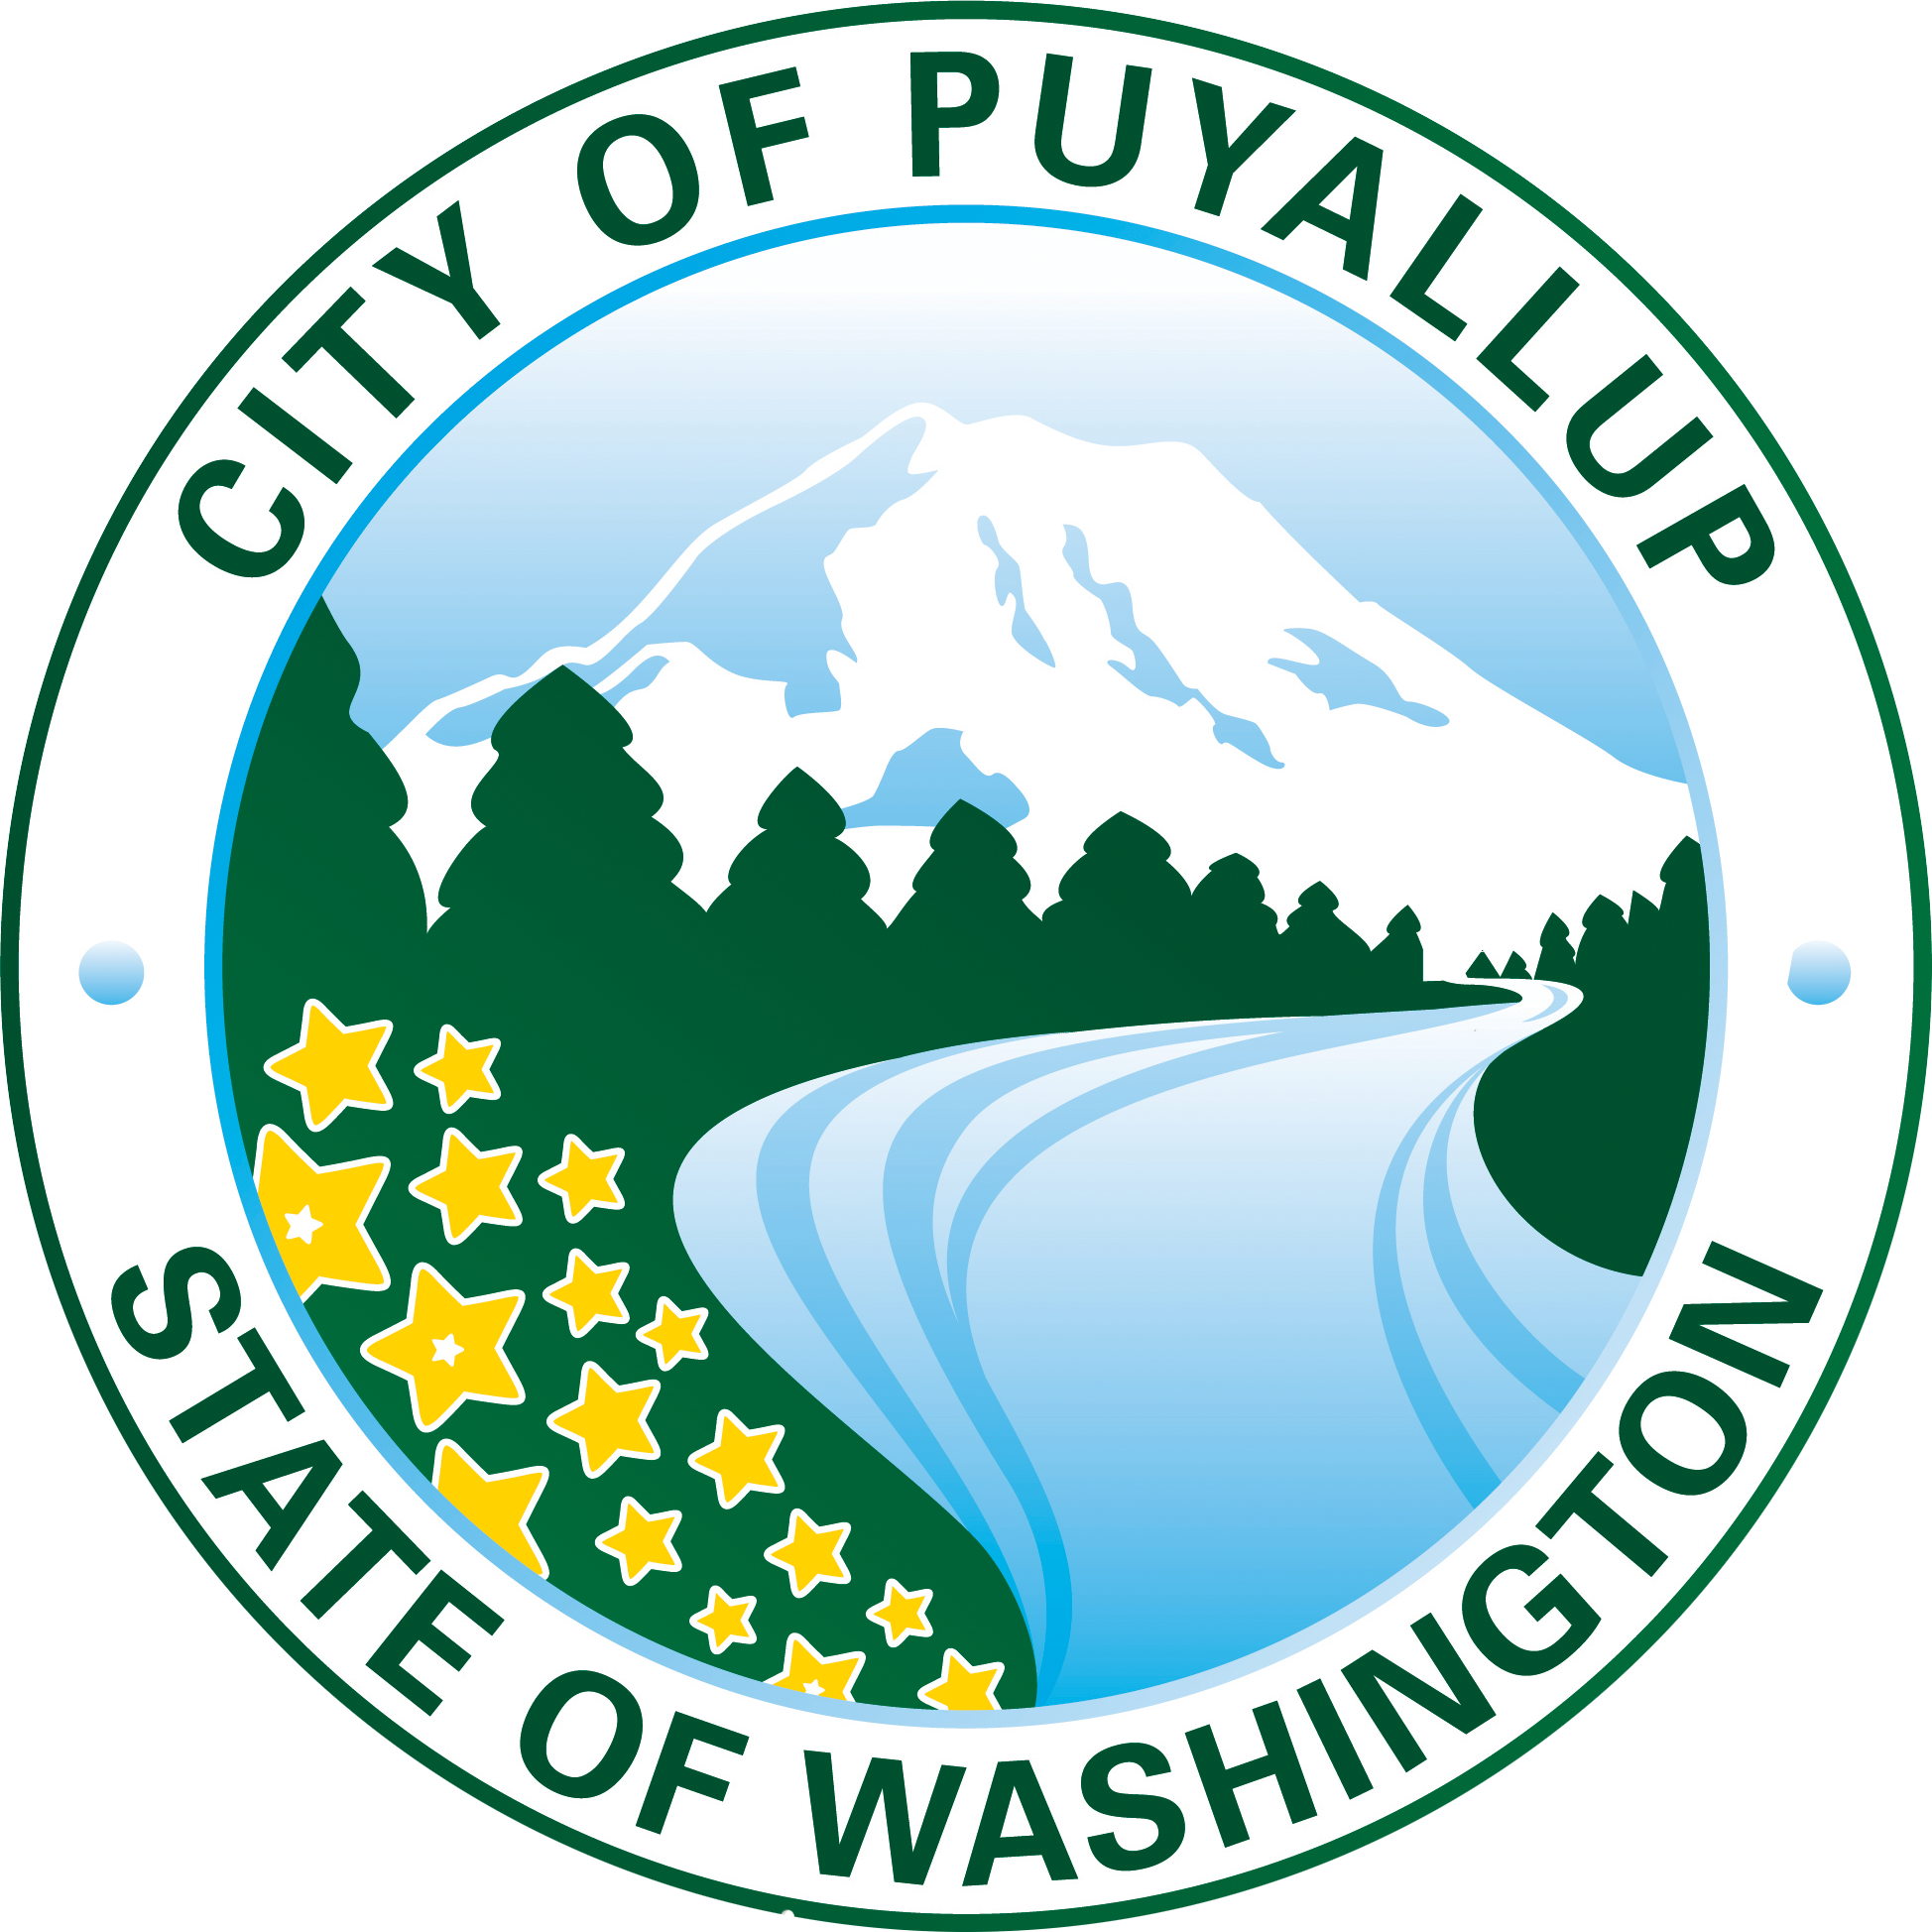 City of Puyallup logo. 